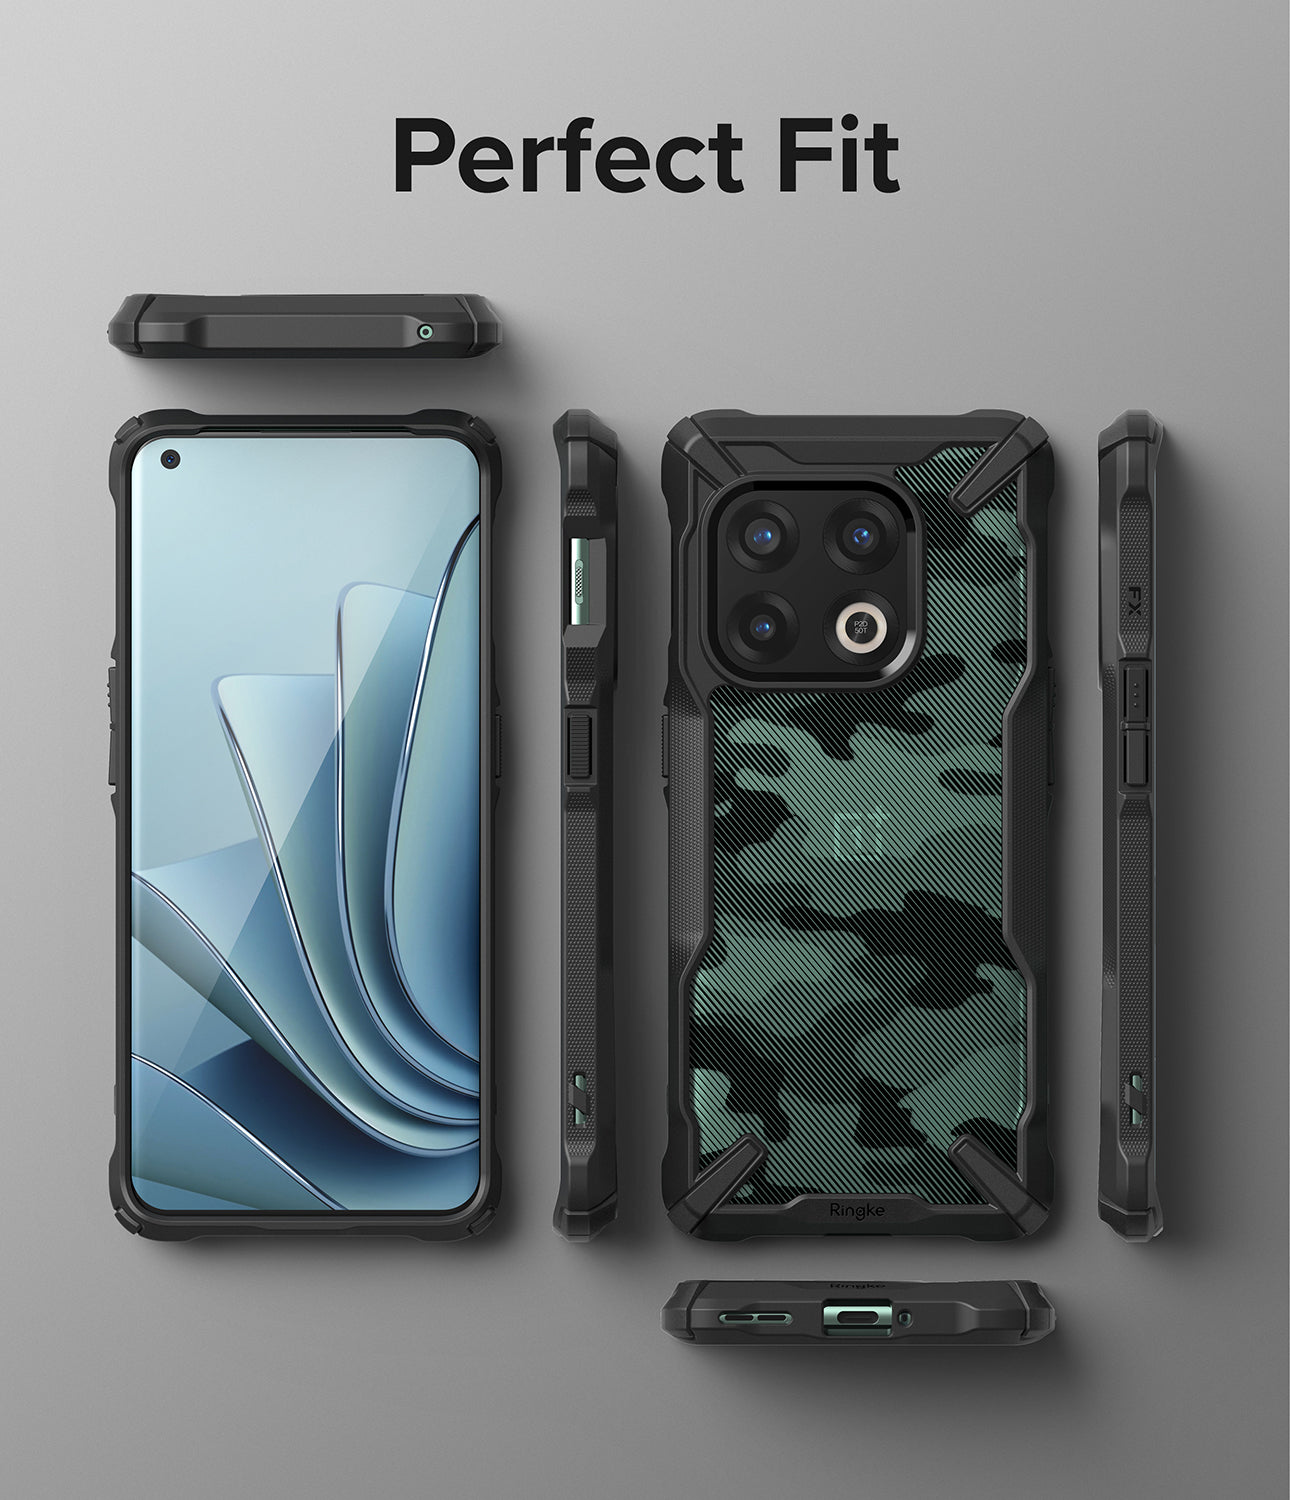 OnePlus 10 Pro 5G Case | Fusion-X